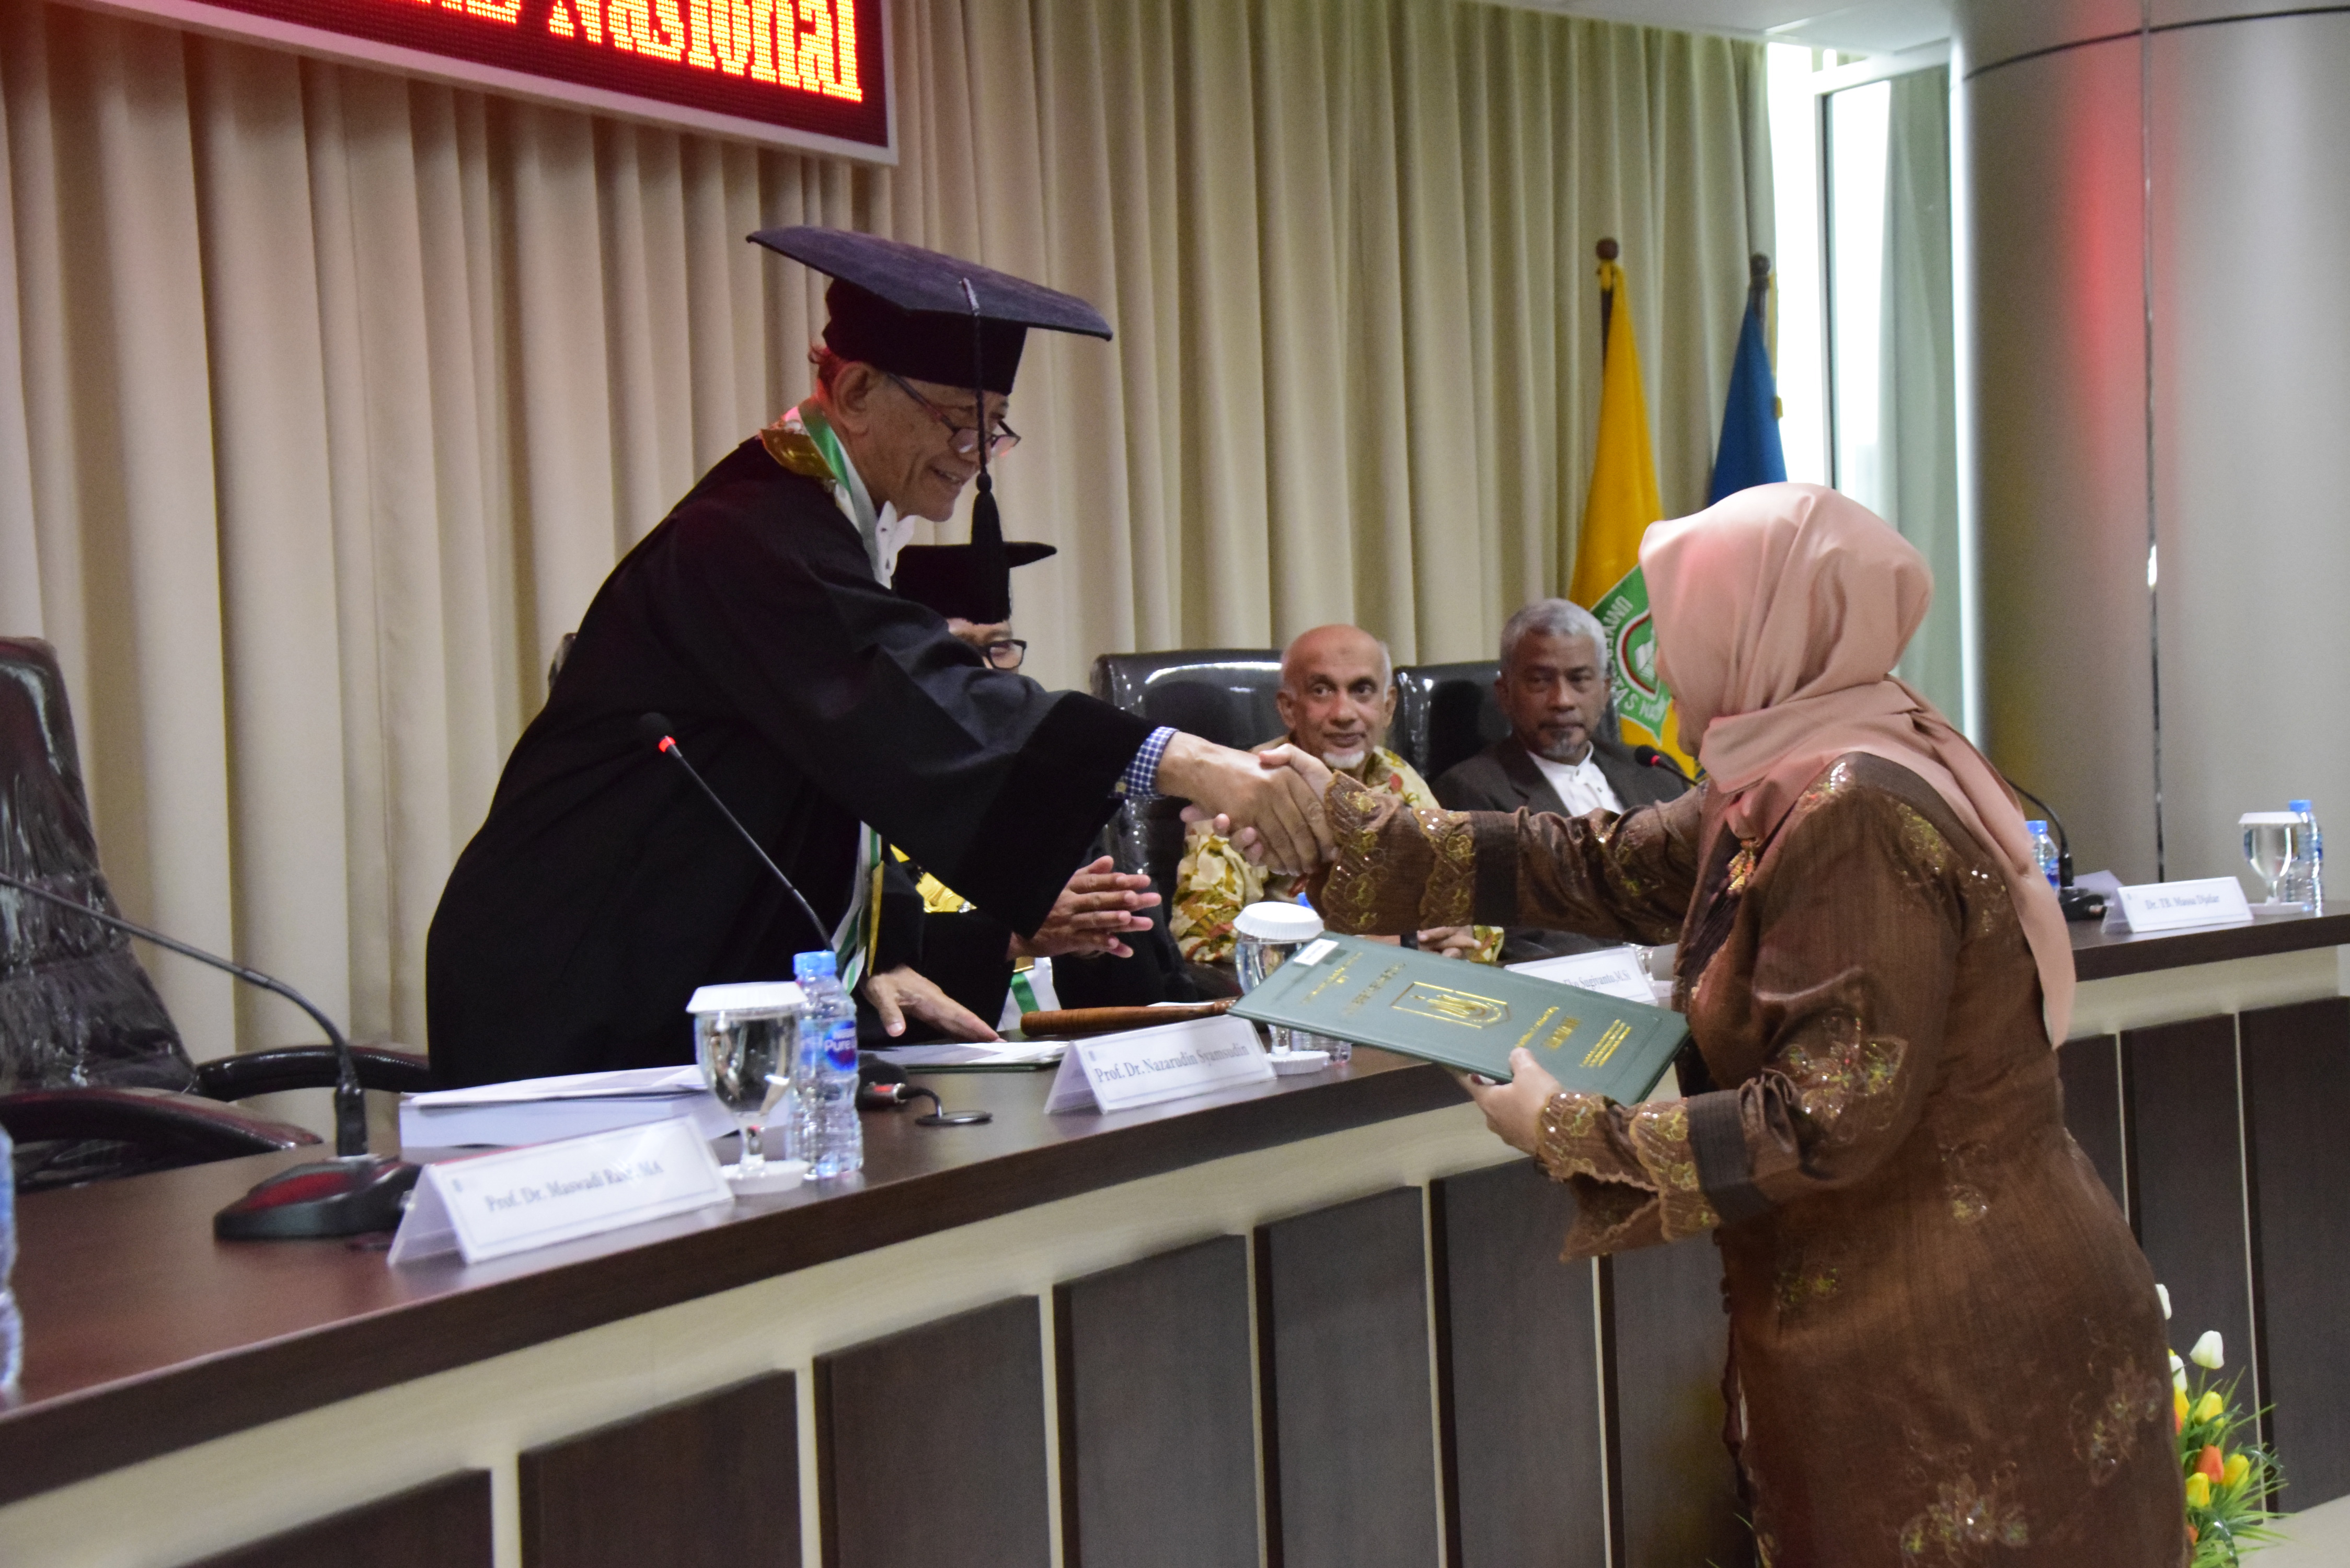 Sdr Any Hindrianty sedang menerima ijazah dari promotor, Prof. Dr. Nazarudin Syamsudin